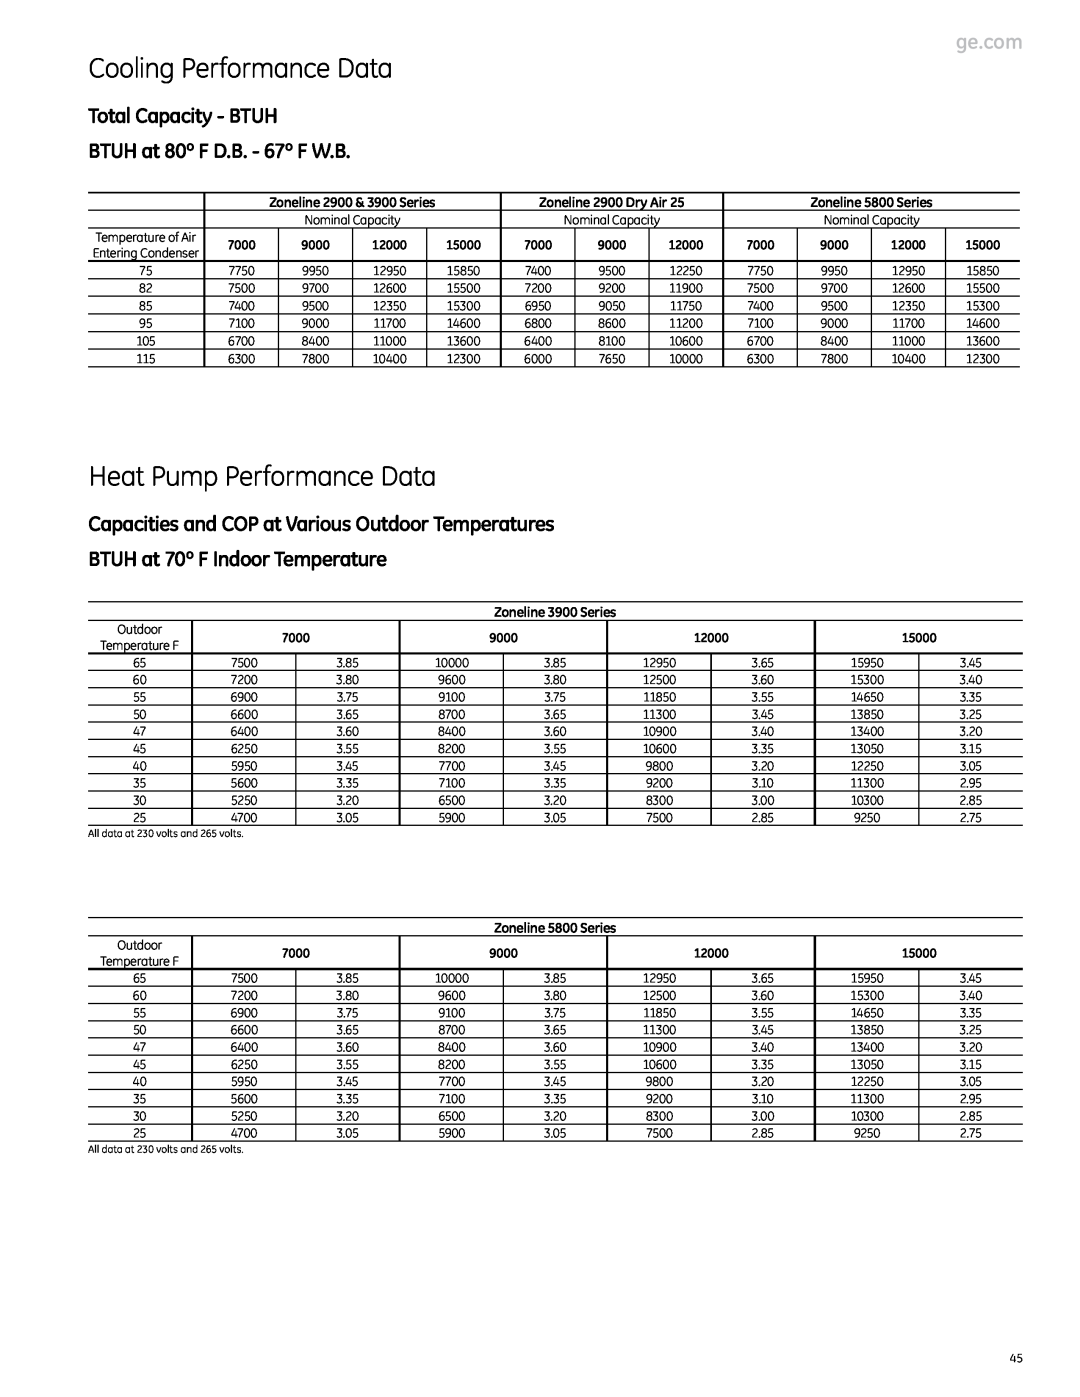 GE Monogram 3900 Series Cooling Performance Data, Heat Pump Performance Data, Total Capacity - BTUH, Zoneline 2900 Dry Air 